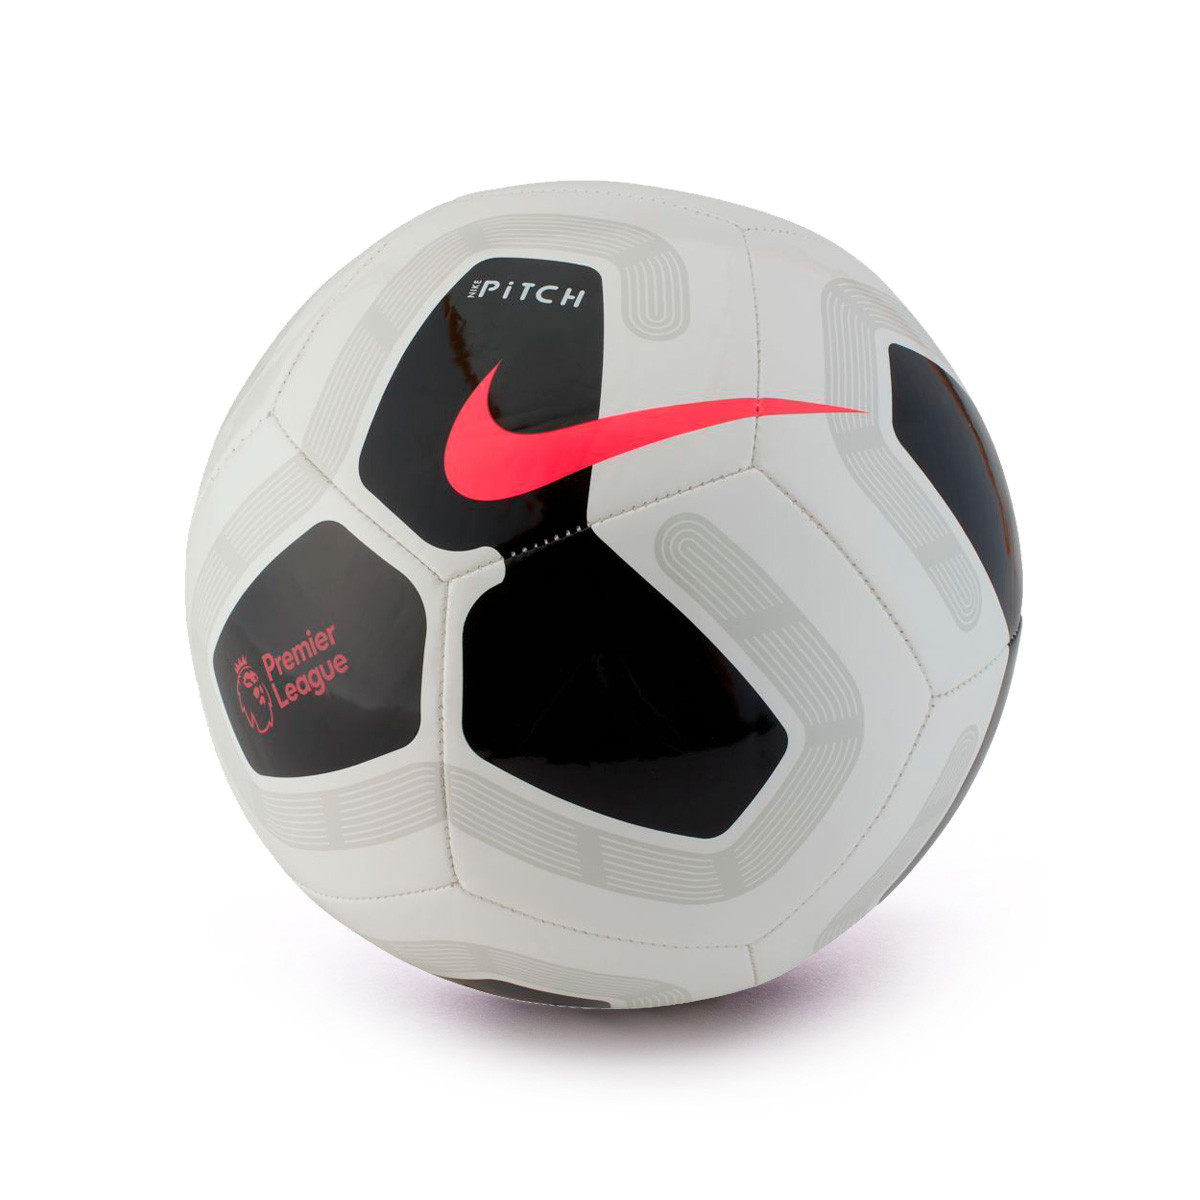 Balón Nike Premier League Pitch 2019-2020 White-Black-Cool grey-Racer pink  - Tienda de fútbol Fútbol Emotion